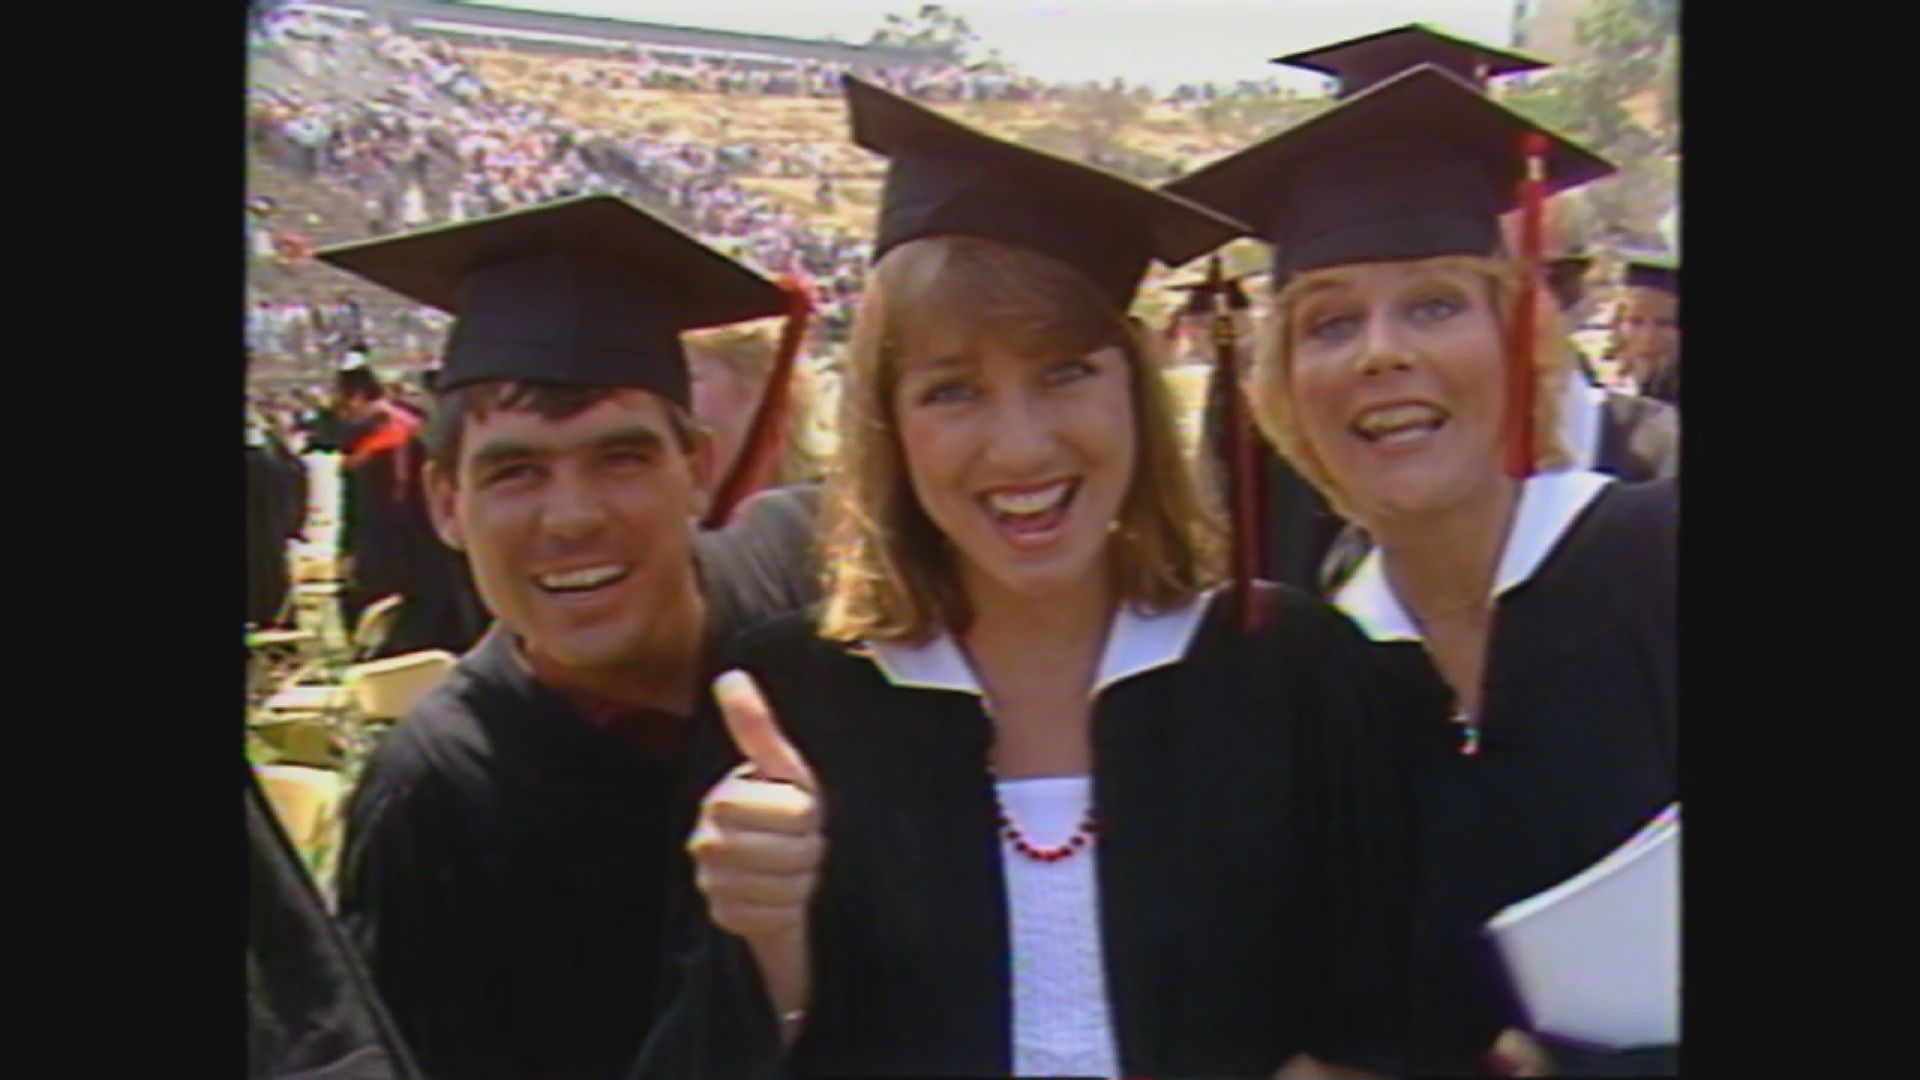 May 20, 1984 SDSU graduation ceremony. Lorraine Kimel and Dana Levin.